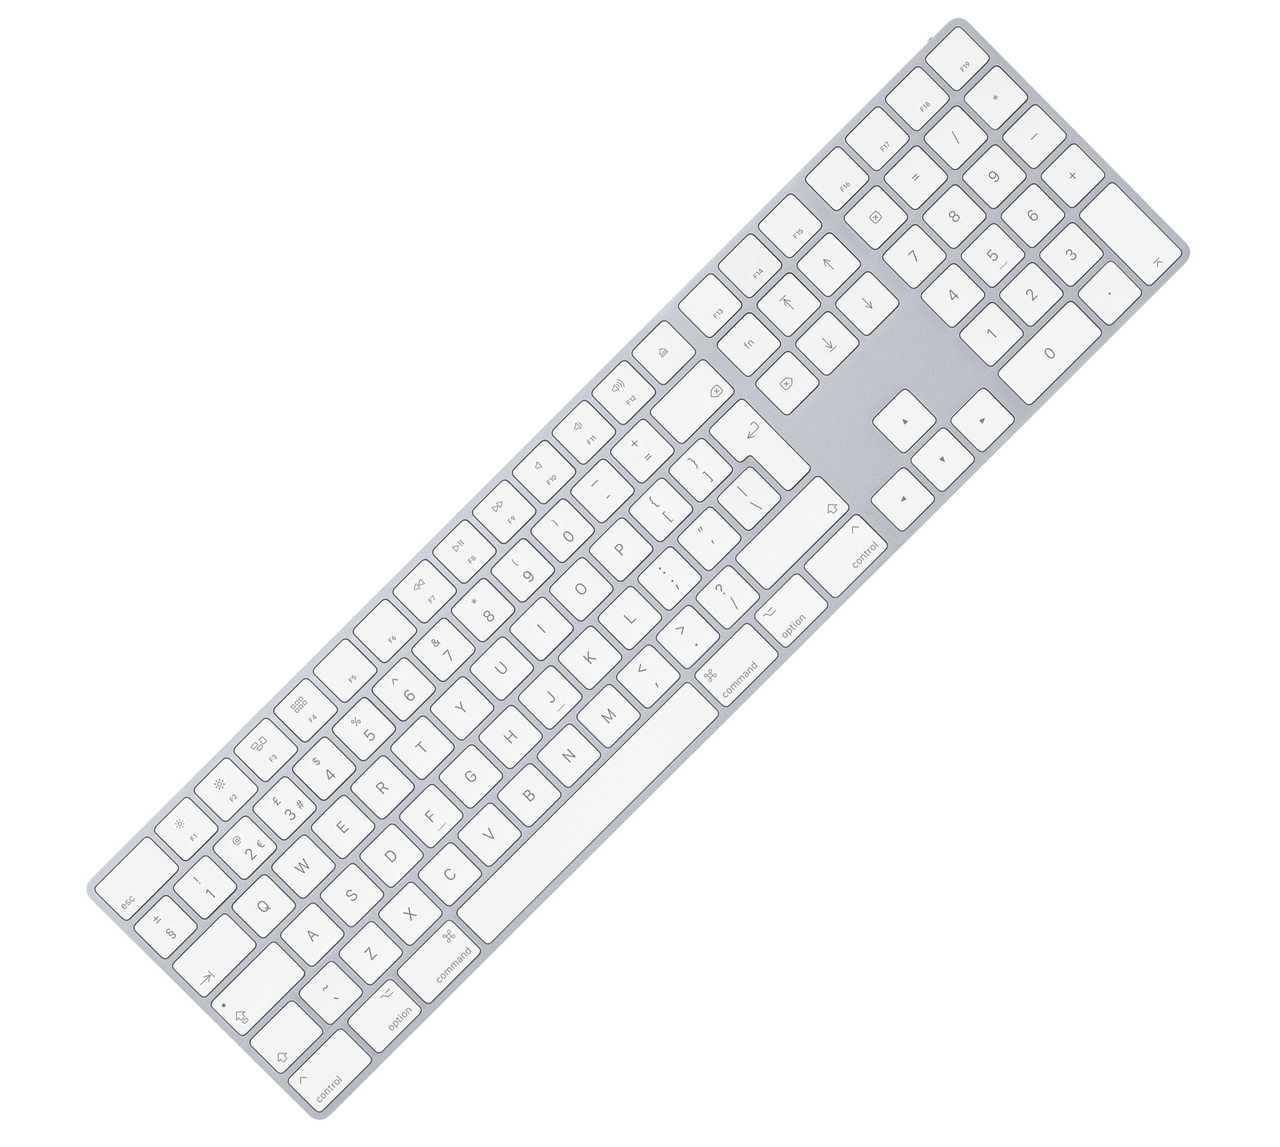 Souvenir Onderscheiden pion Apple draadloos Nummeriek Magic Keyboard toetsenbord - Appelhoes